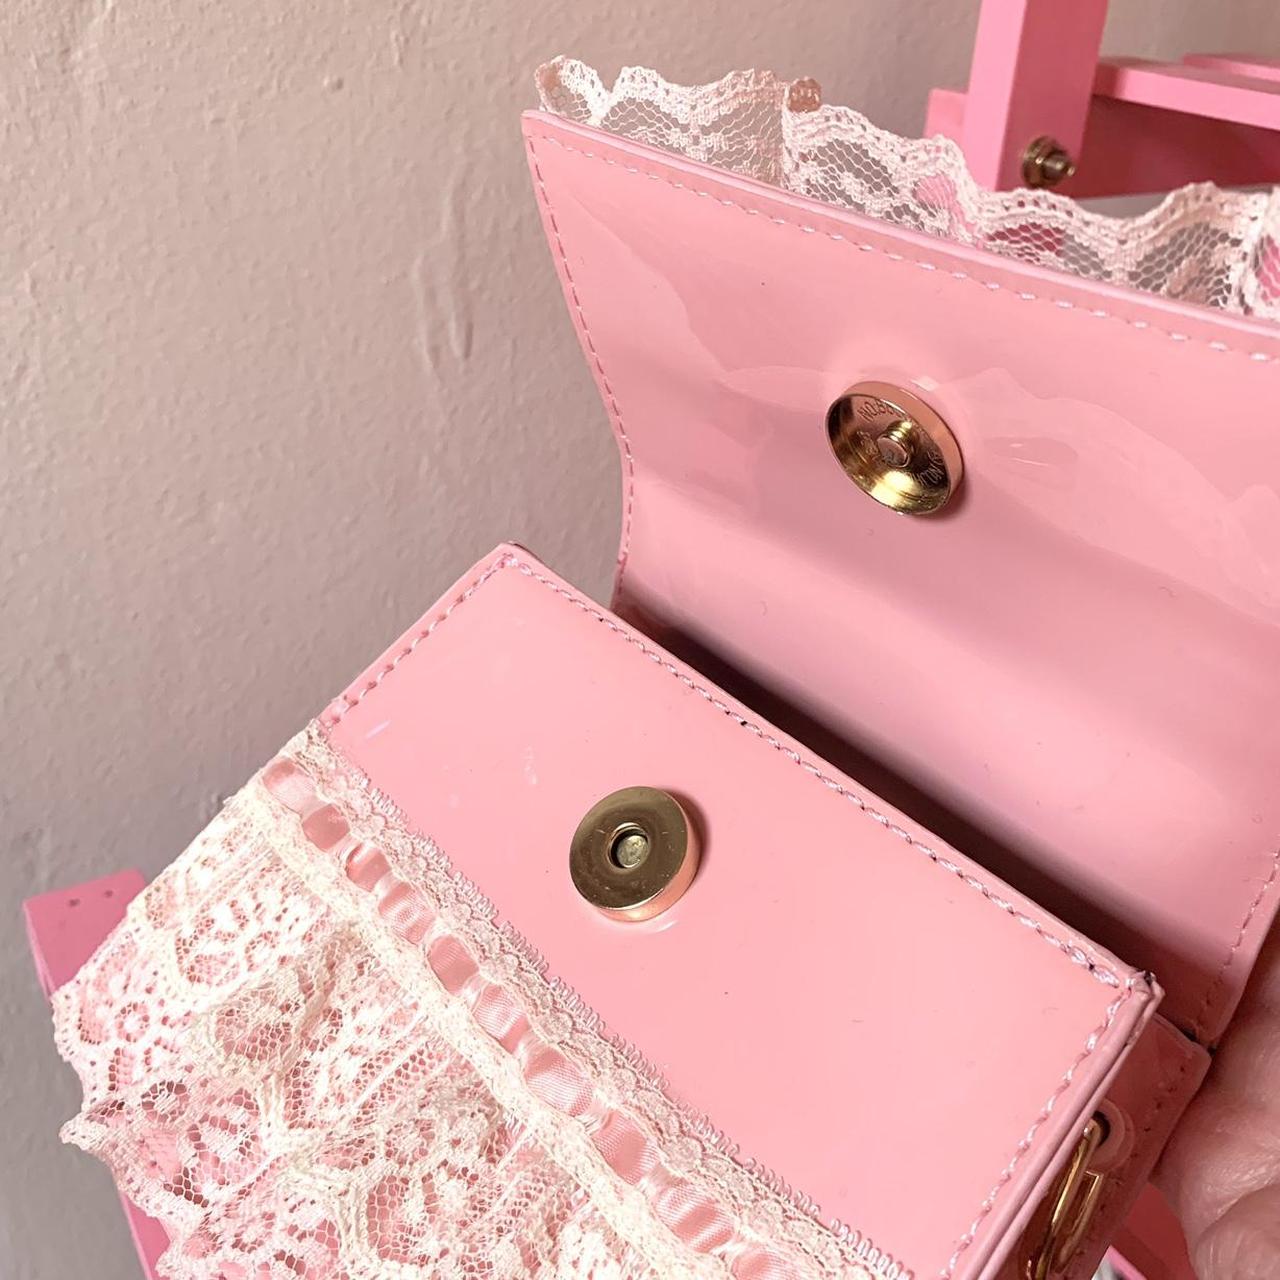 Sugarpill Women's Pink and White Bag (4)